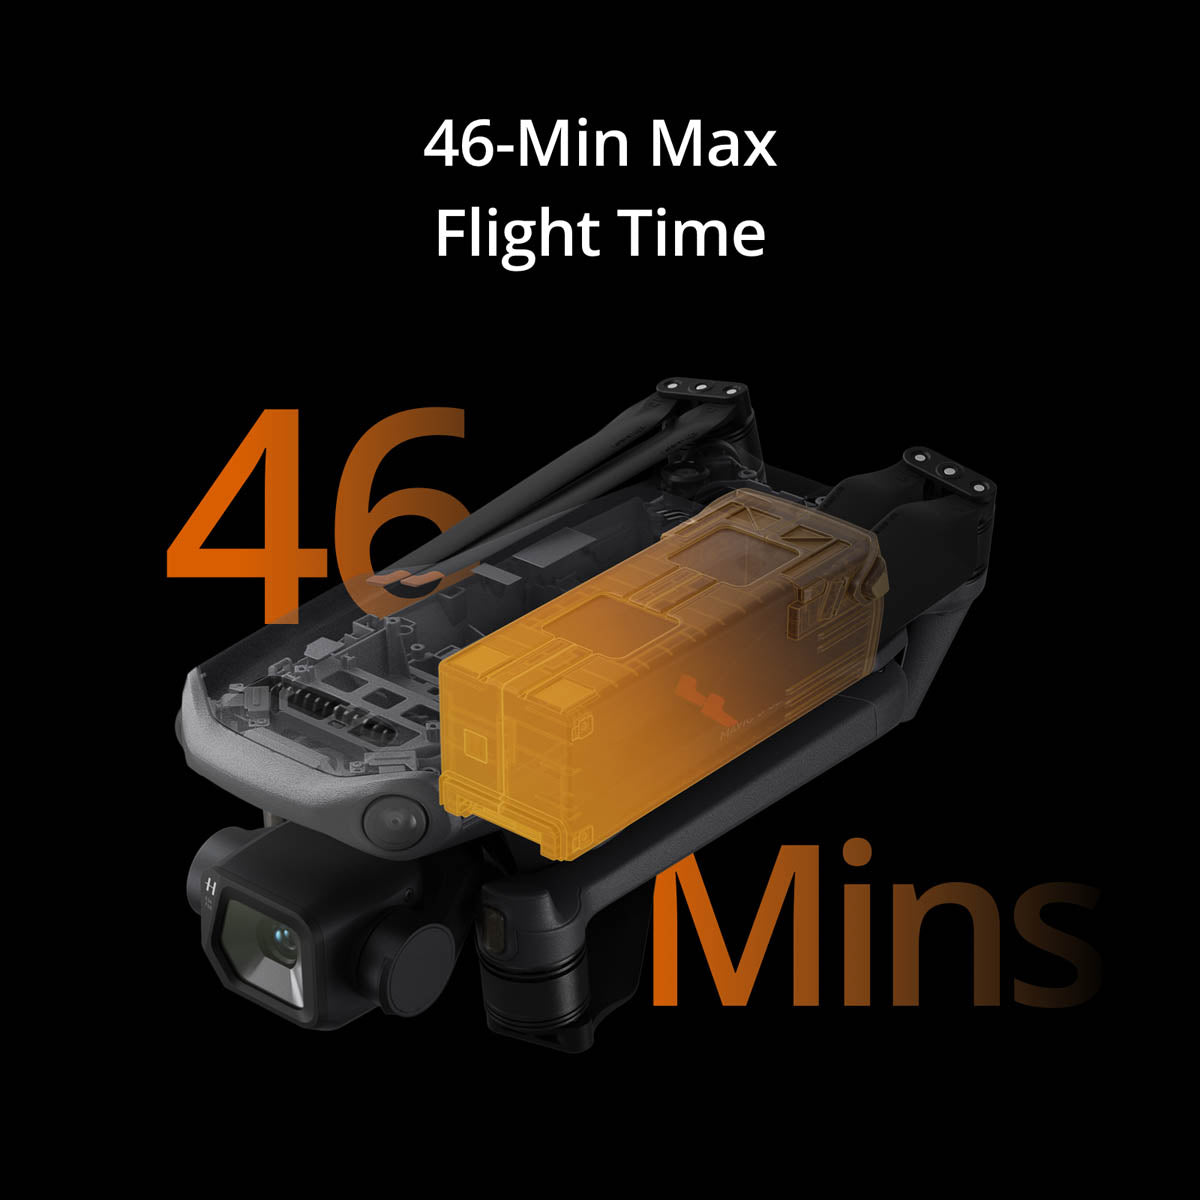  DJI Mavic 3, Drone with 4/3 CMOS Hasselblad Camera